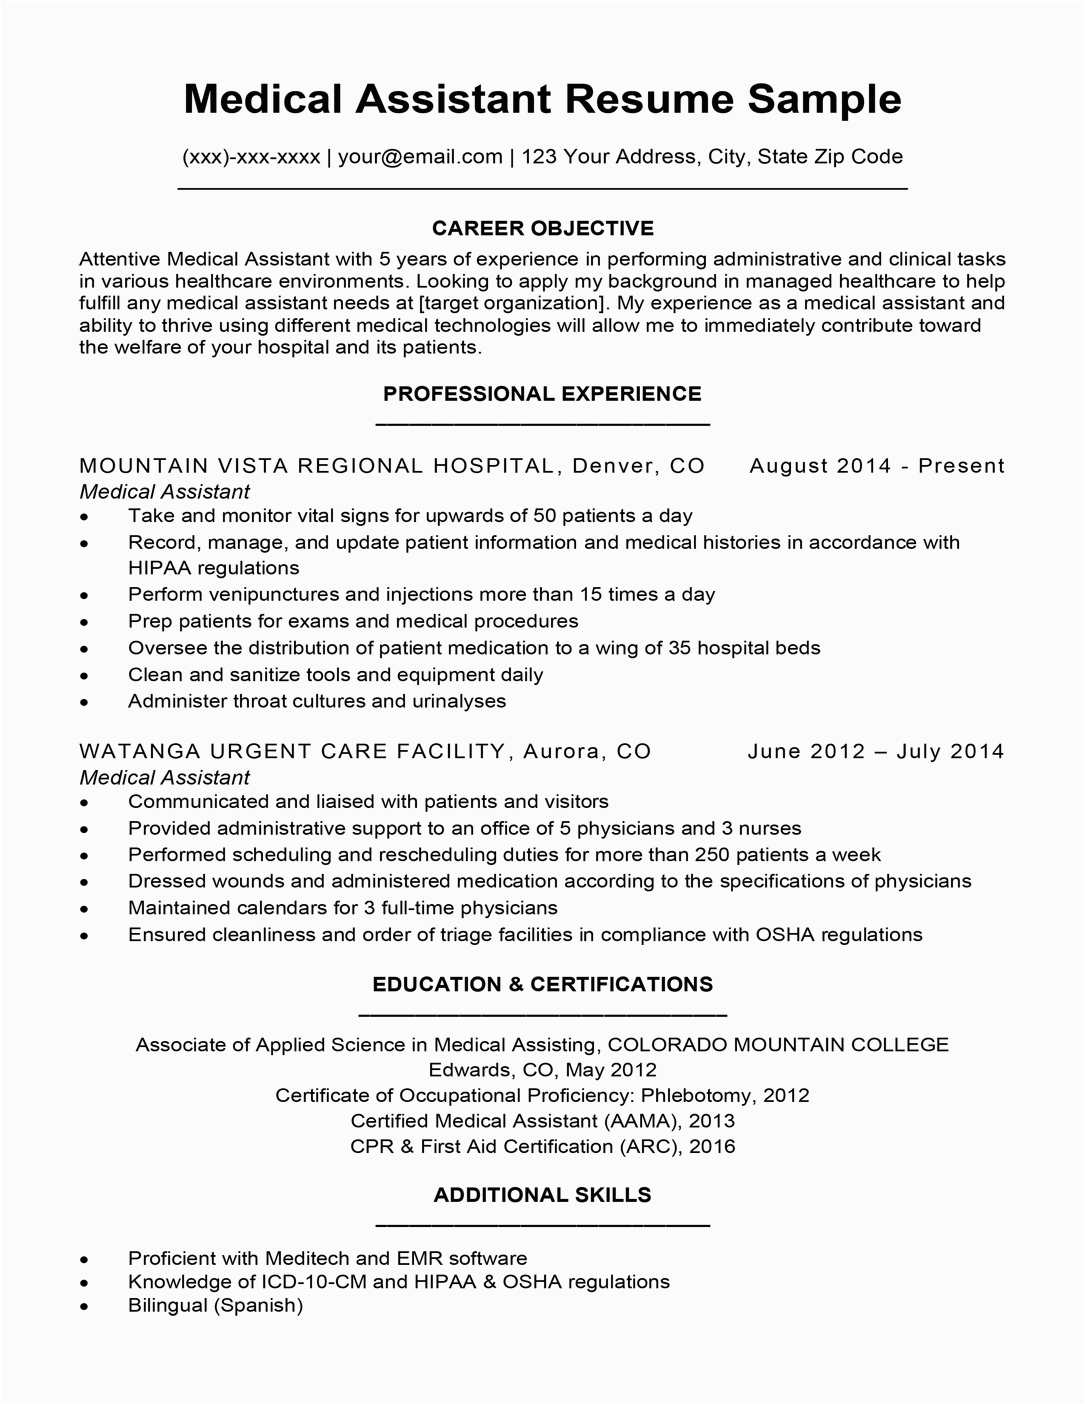 Sample Resume for Healthcare Administrative assistant Medical assistant Resume Sample